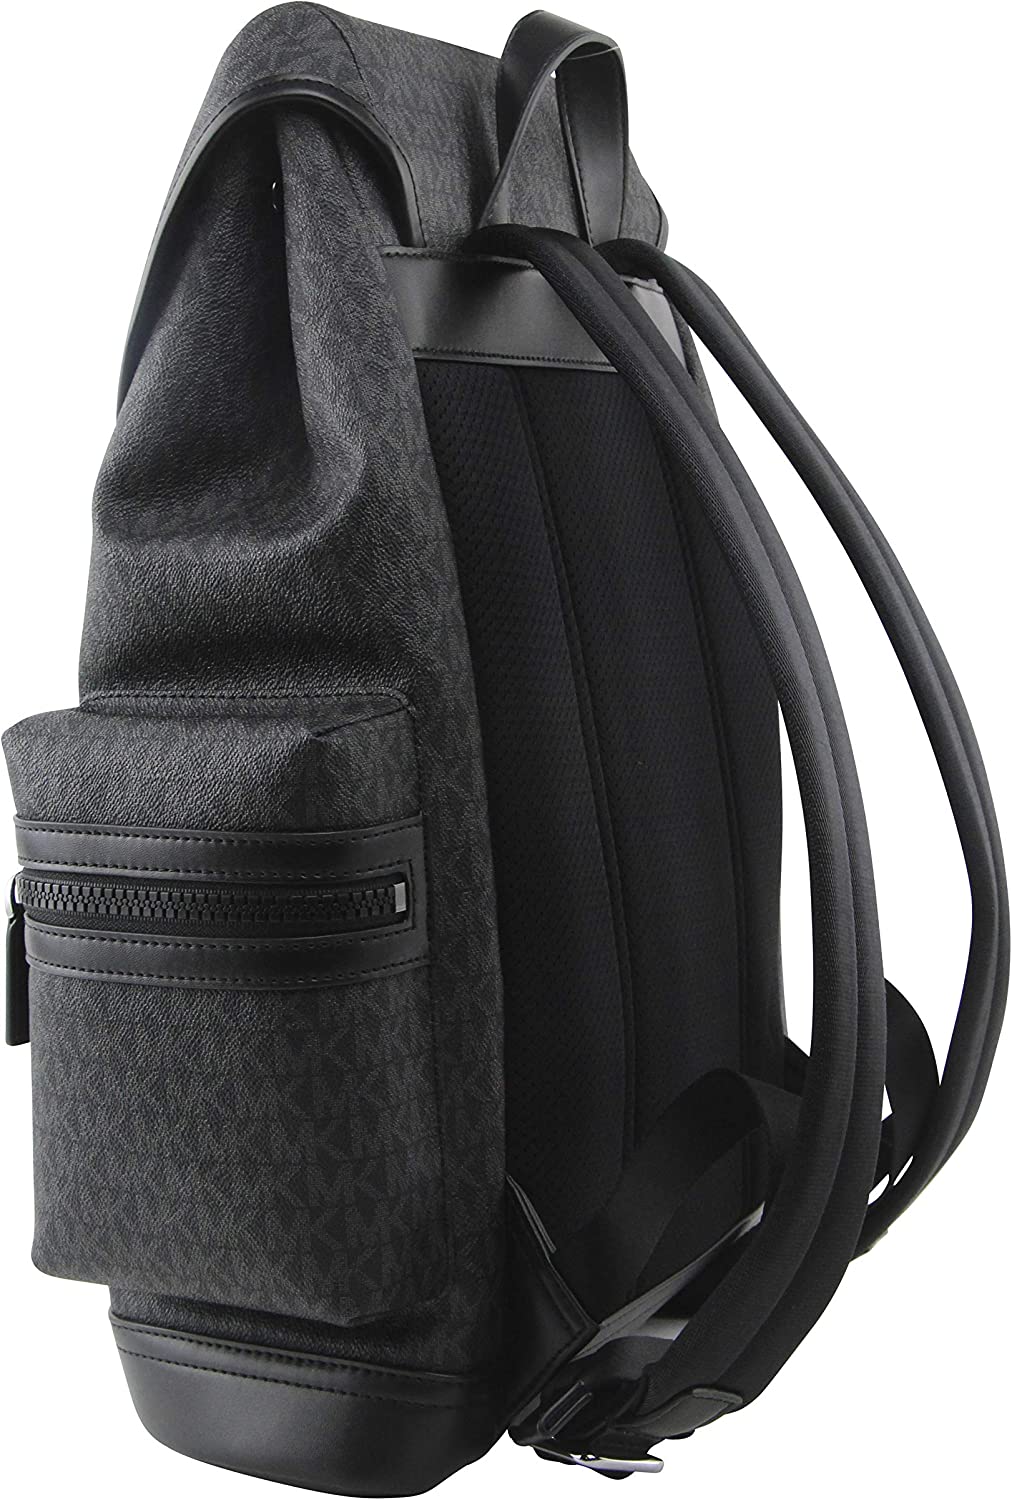 Michael Kors Adult's Men's Unisex Cooper Signature PVC Graphic Logo  Backpack (Black White Multi)